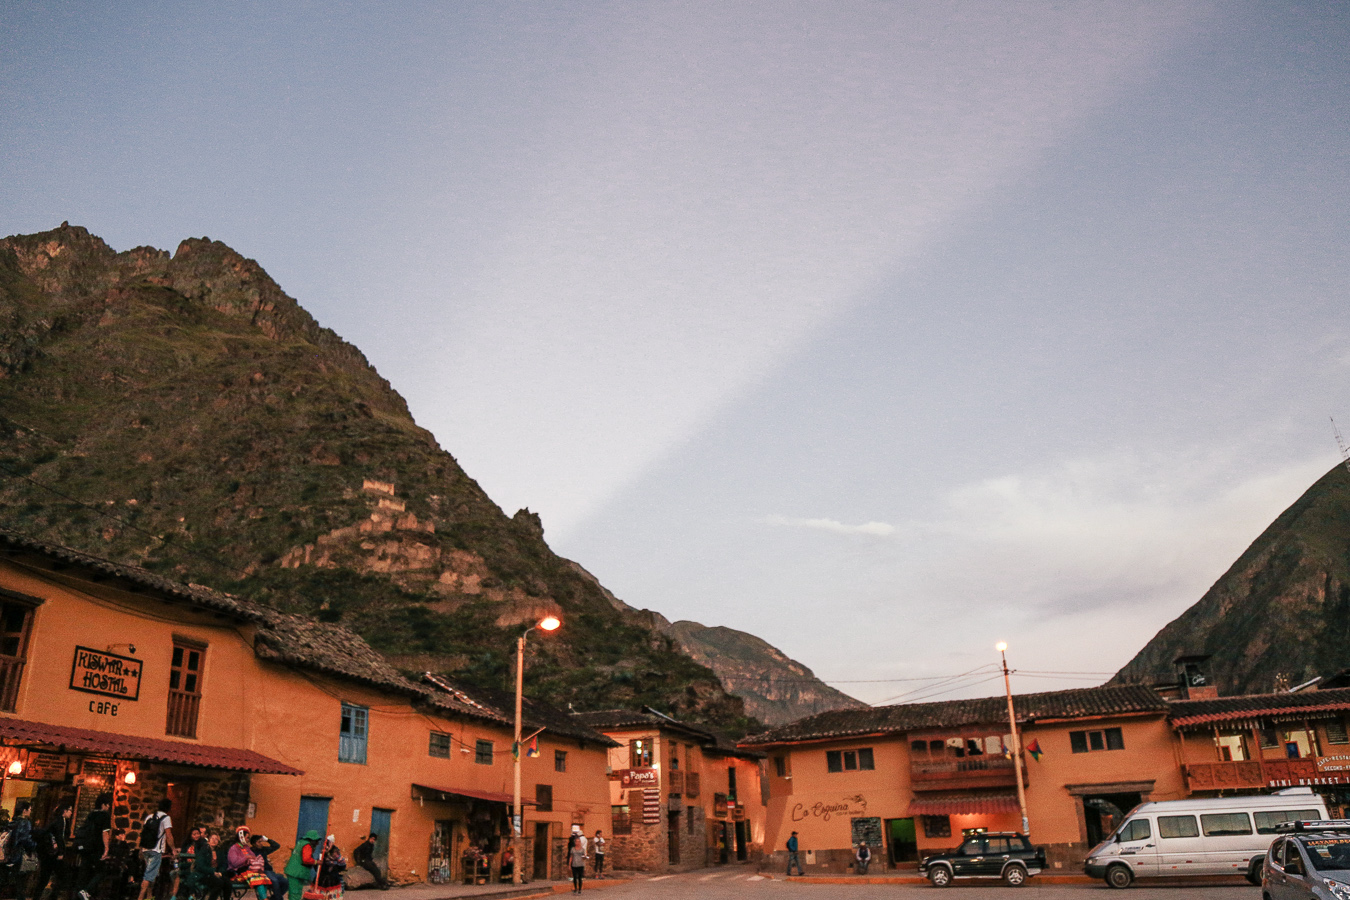 Le Happy travels to Ollantaytambo in Cusco, Peru